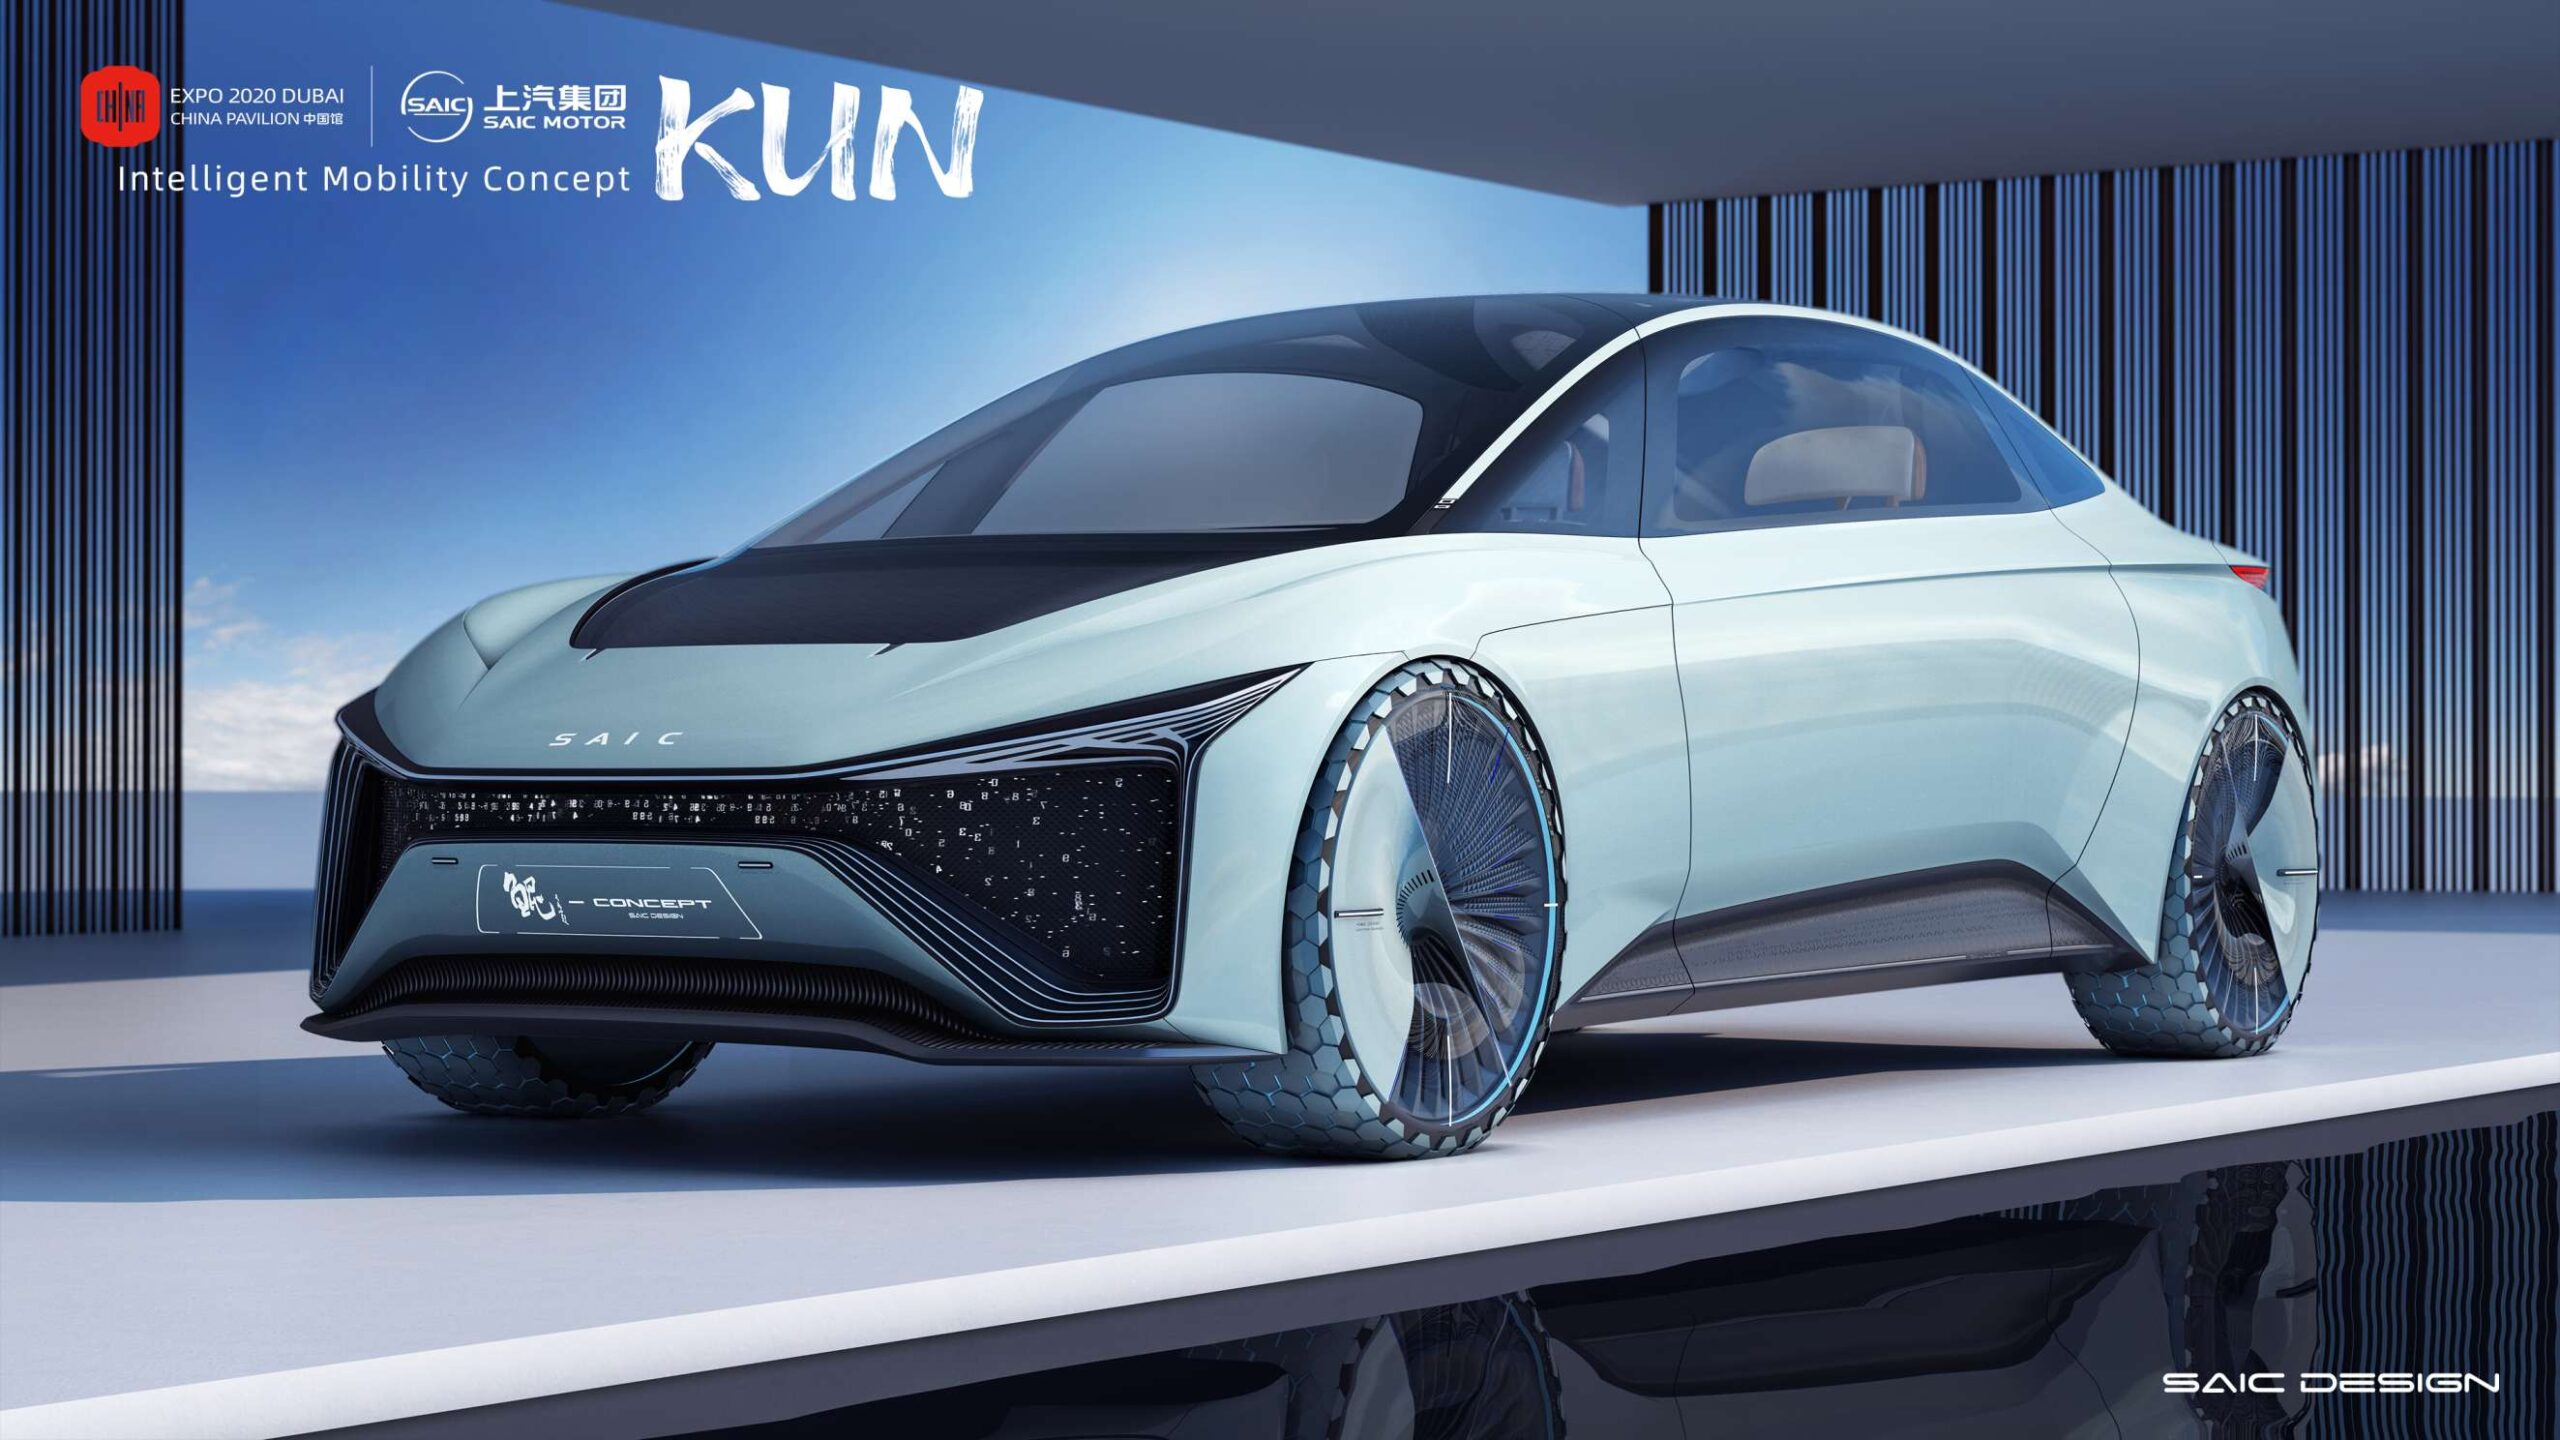 KUN Chinese Concept Car at Expo 2020